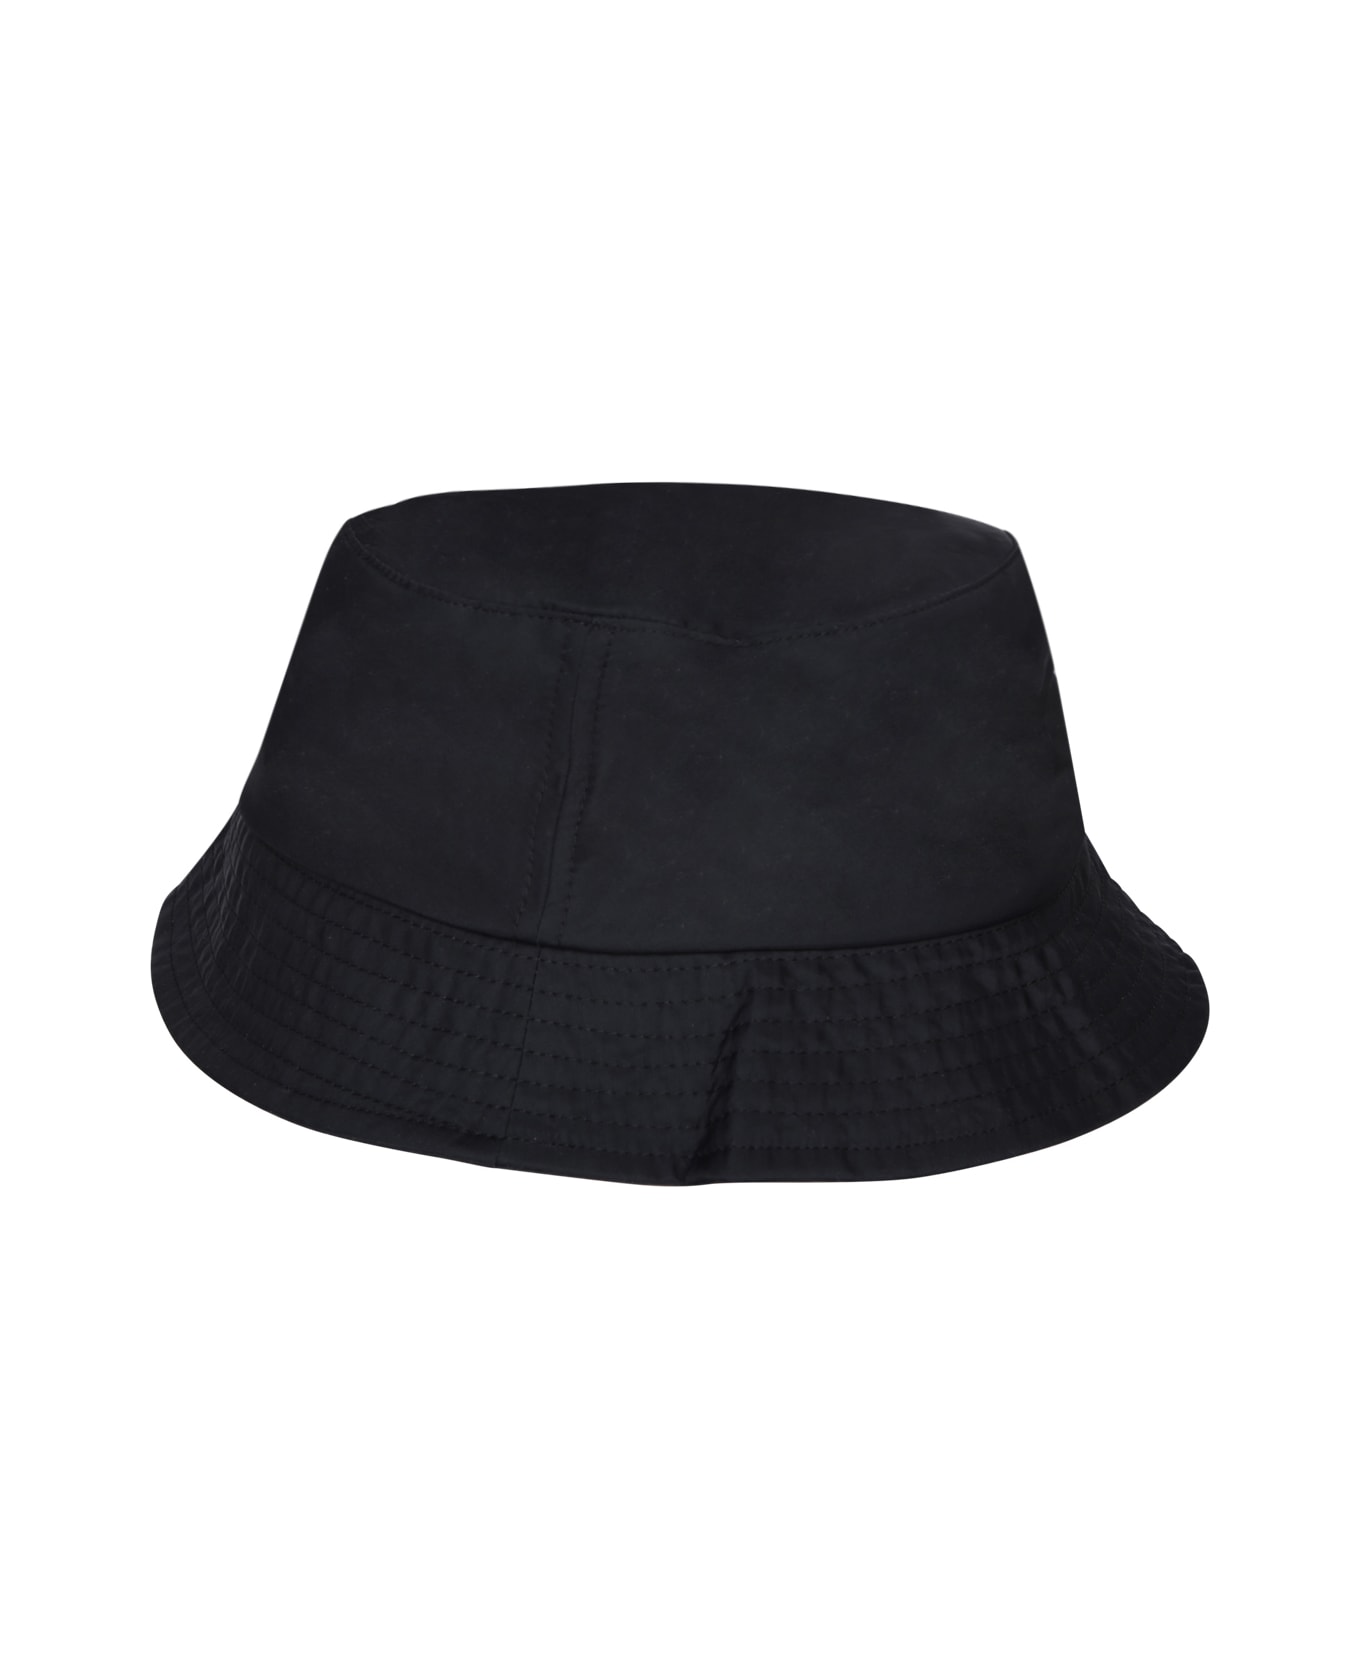 J.W. Anderson Black Bucket Hat - Black